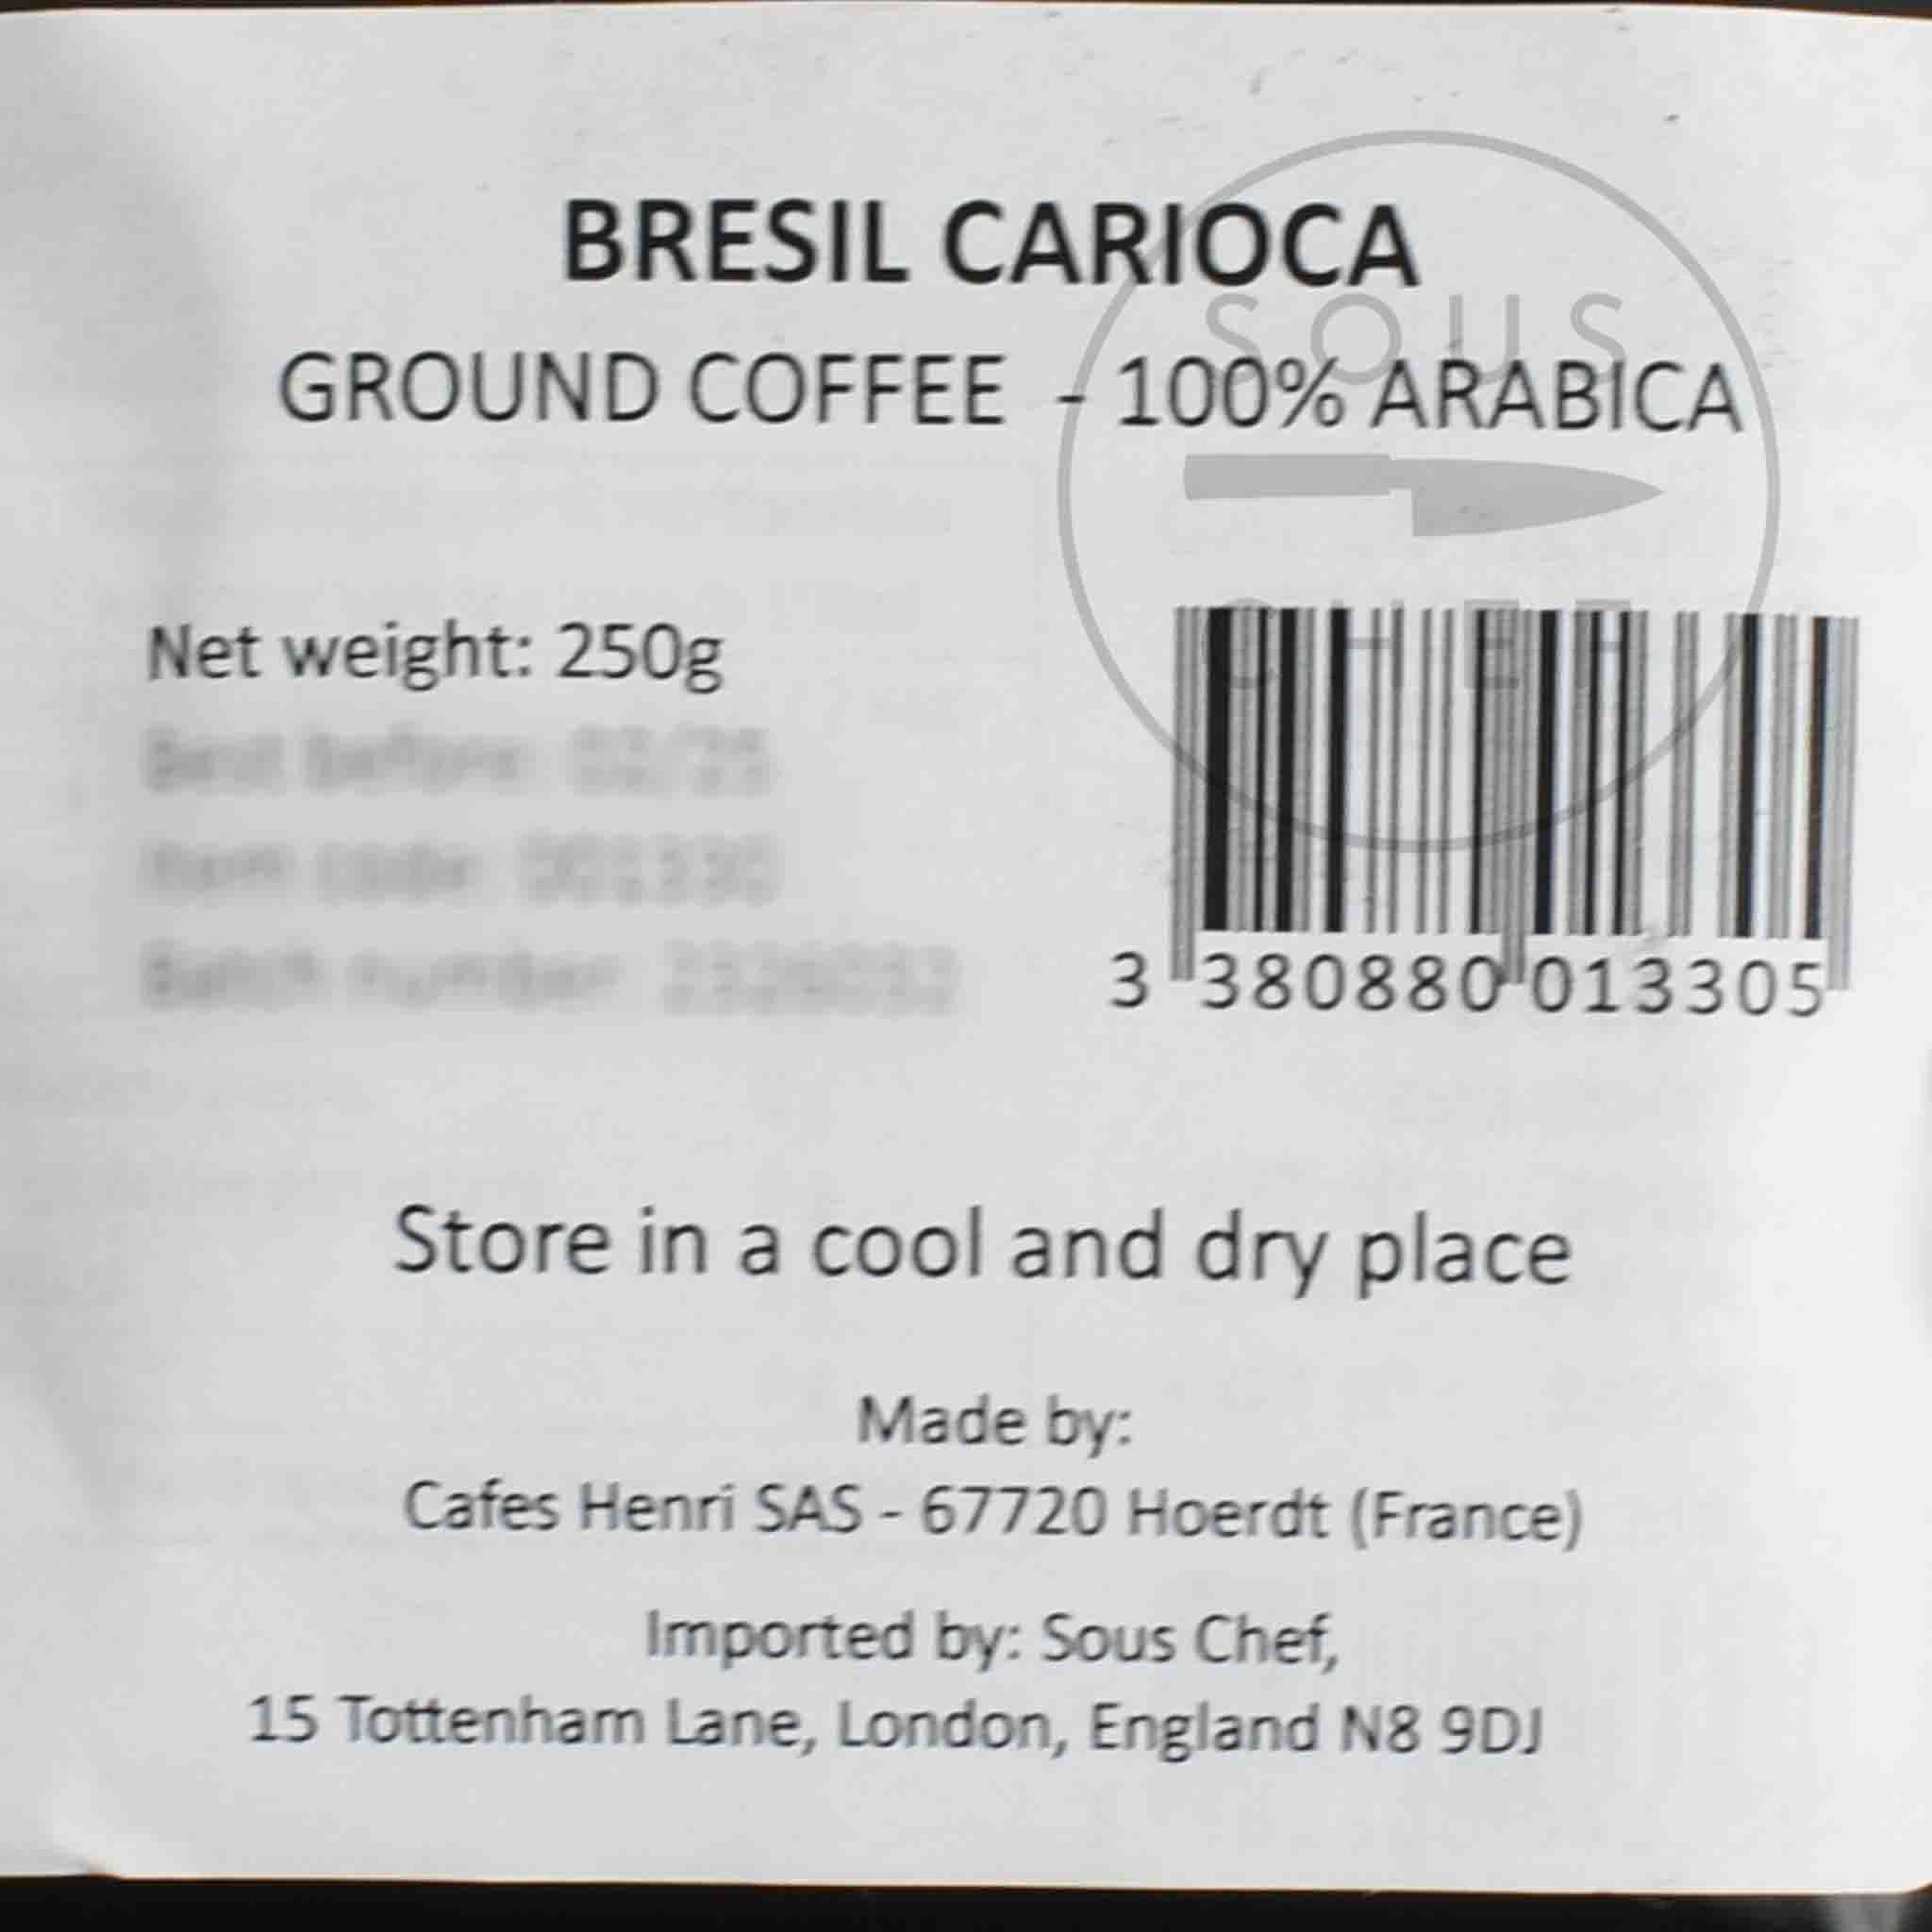 Cafes Henri Brazil Carioca Ground Coffee, 250g